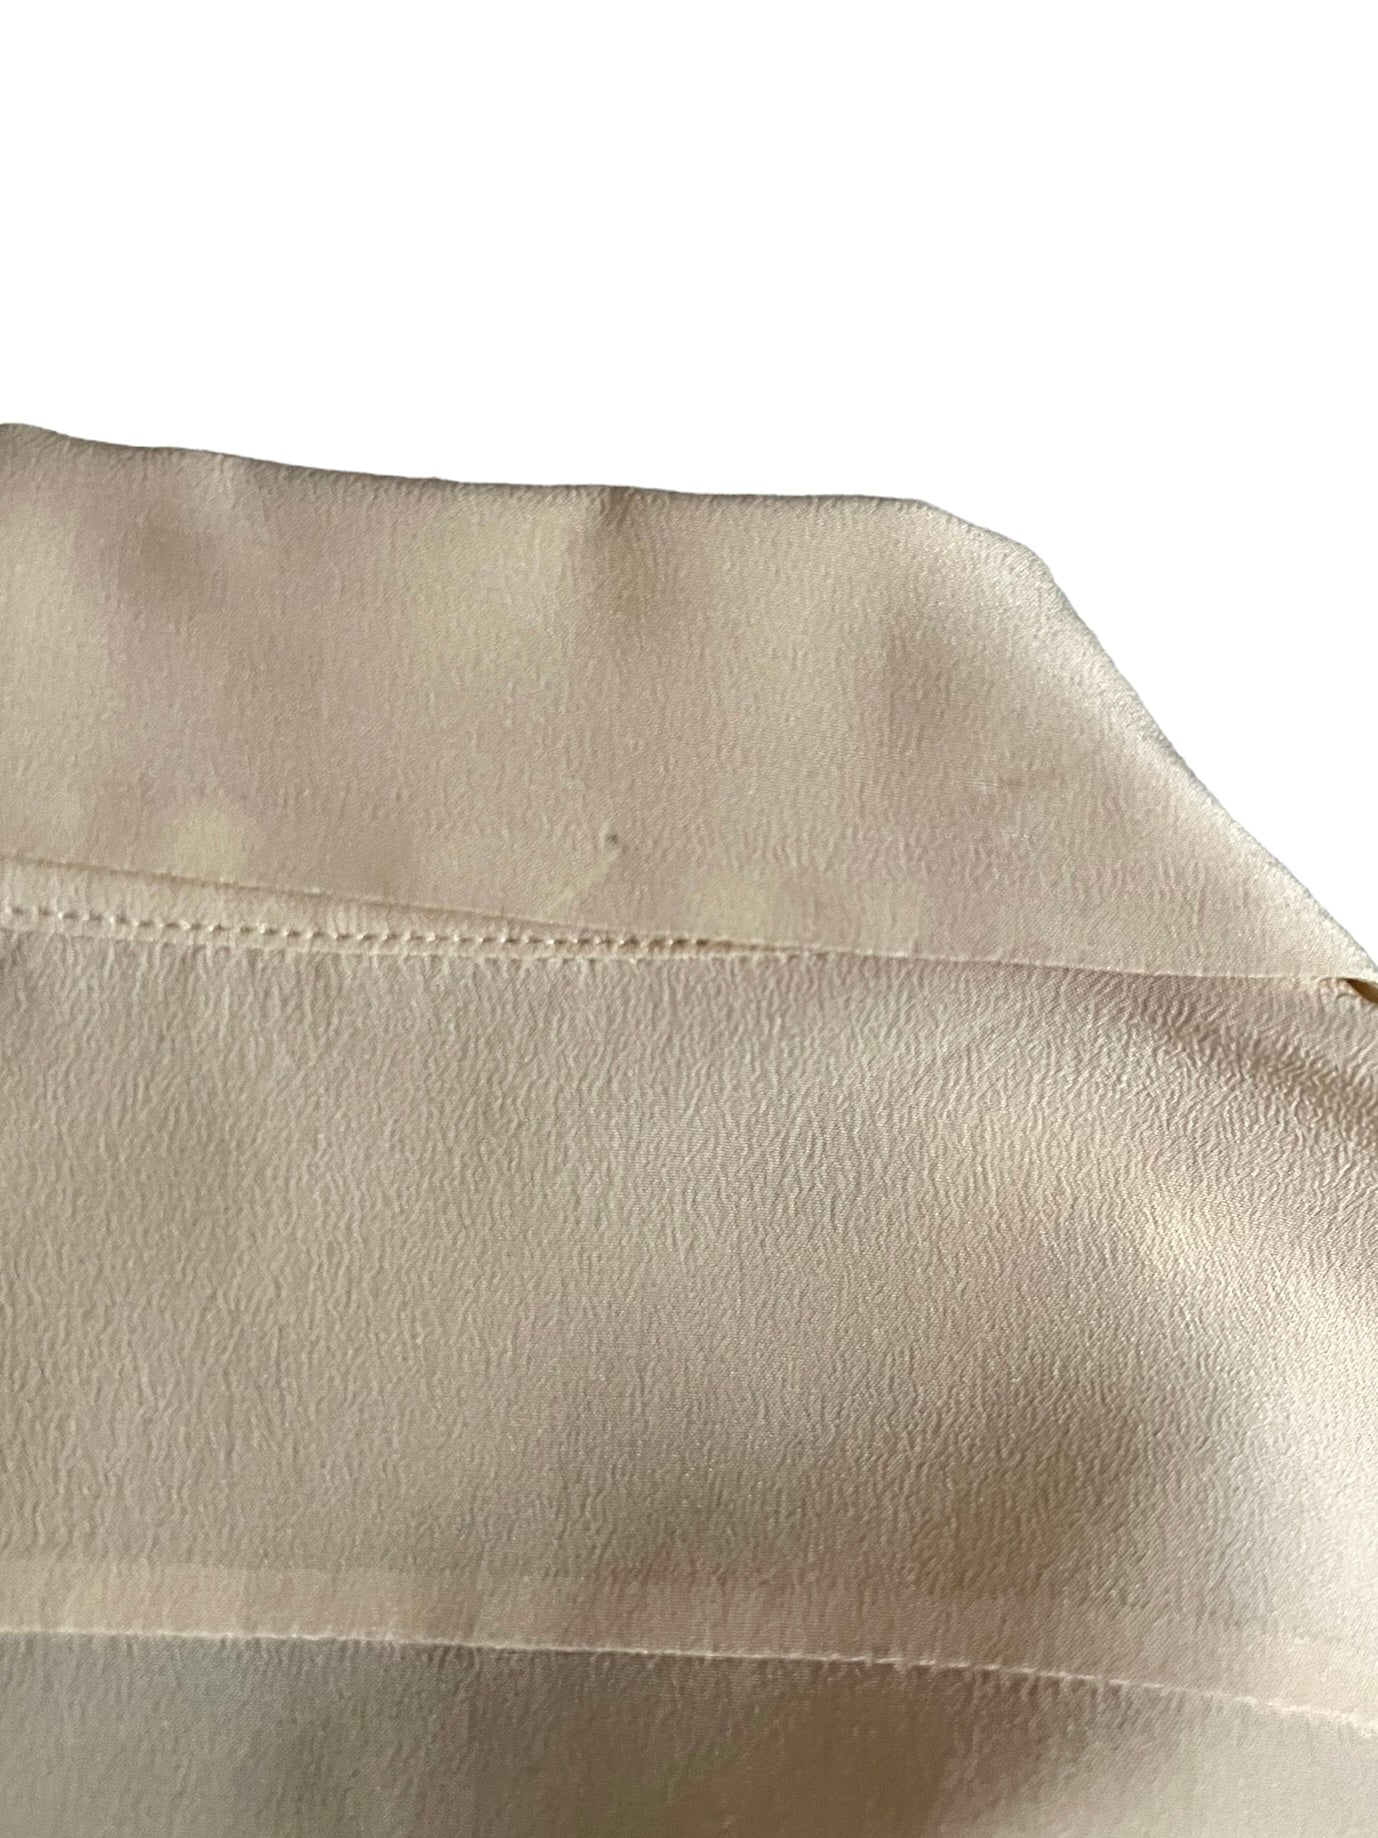 Stella McCartney Silk Crepe Tiger Embroidered Arlo Size 36 Button Down Shirt